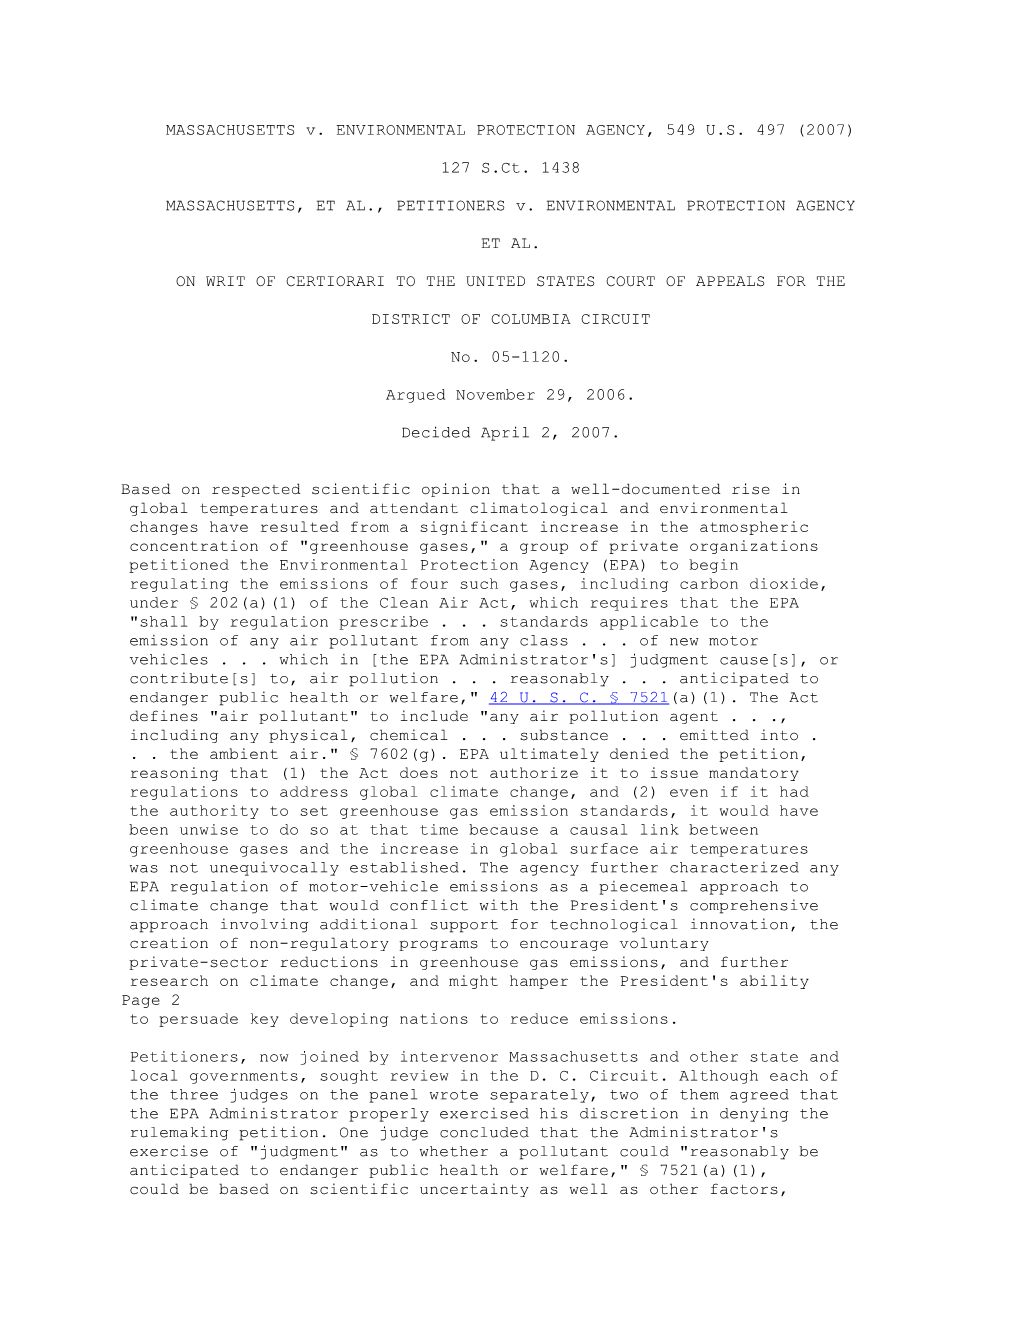 MASSACHUSETTS V. ENVIRONMENTAL PROTECTION AGENCY, 549 U.S. 497 (2007)